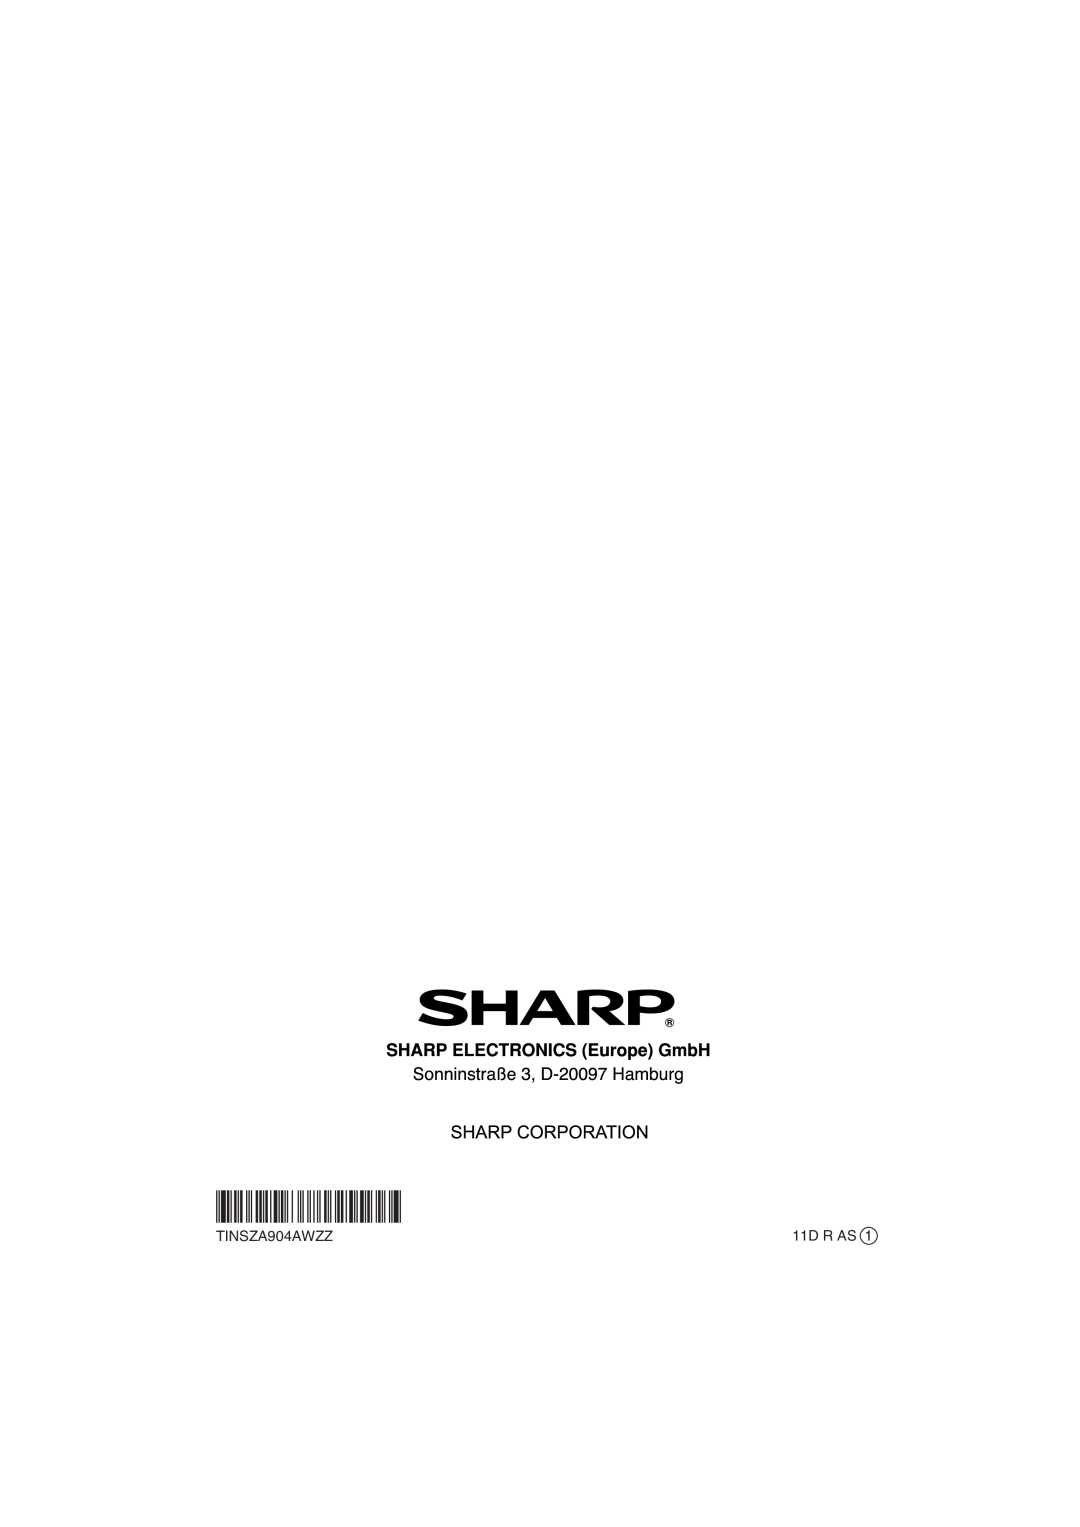 Sharp HT-SL50 operation manual TINSZA904AWZZ, 11D R AS 